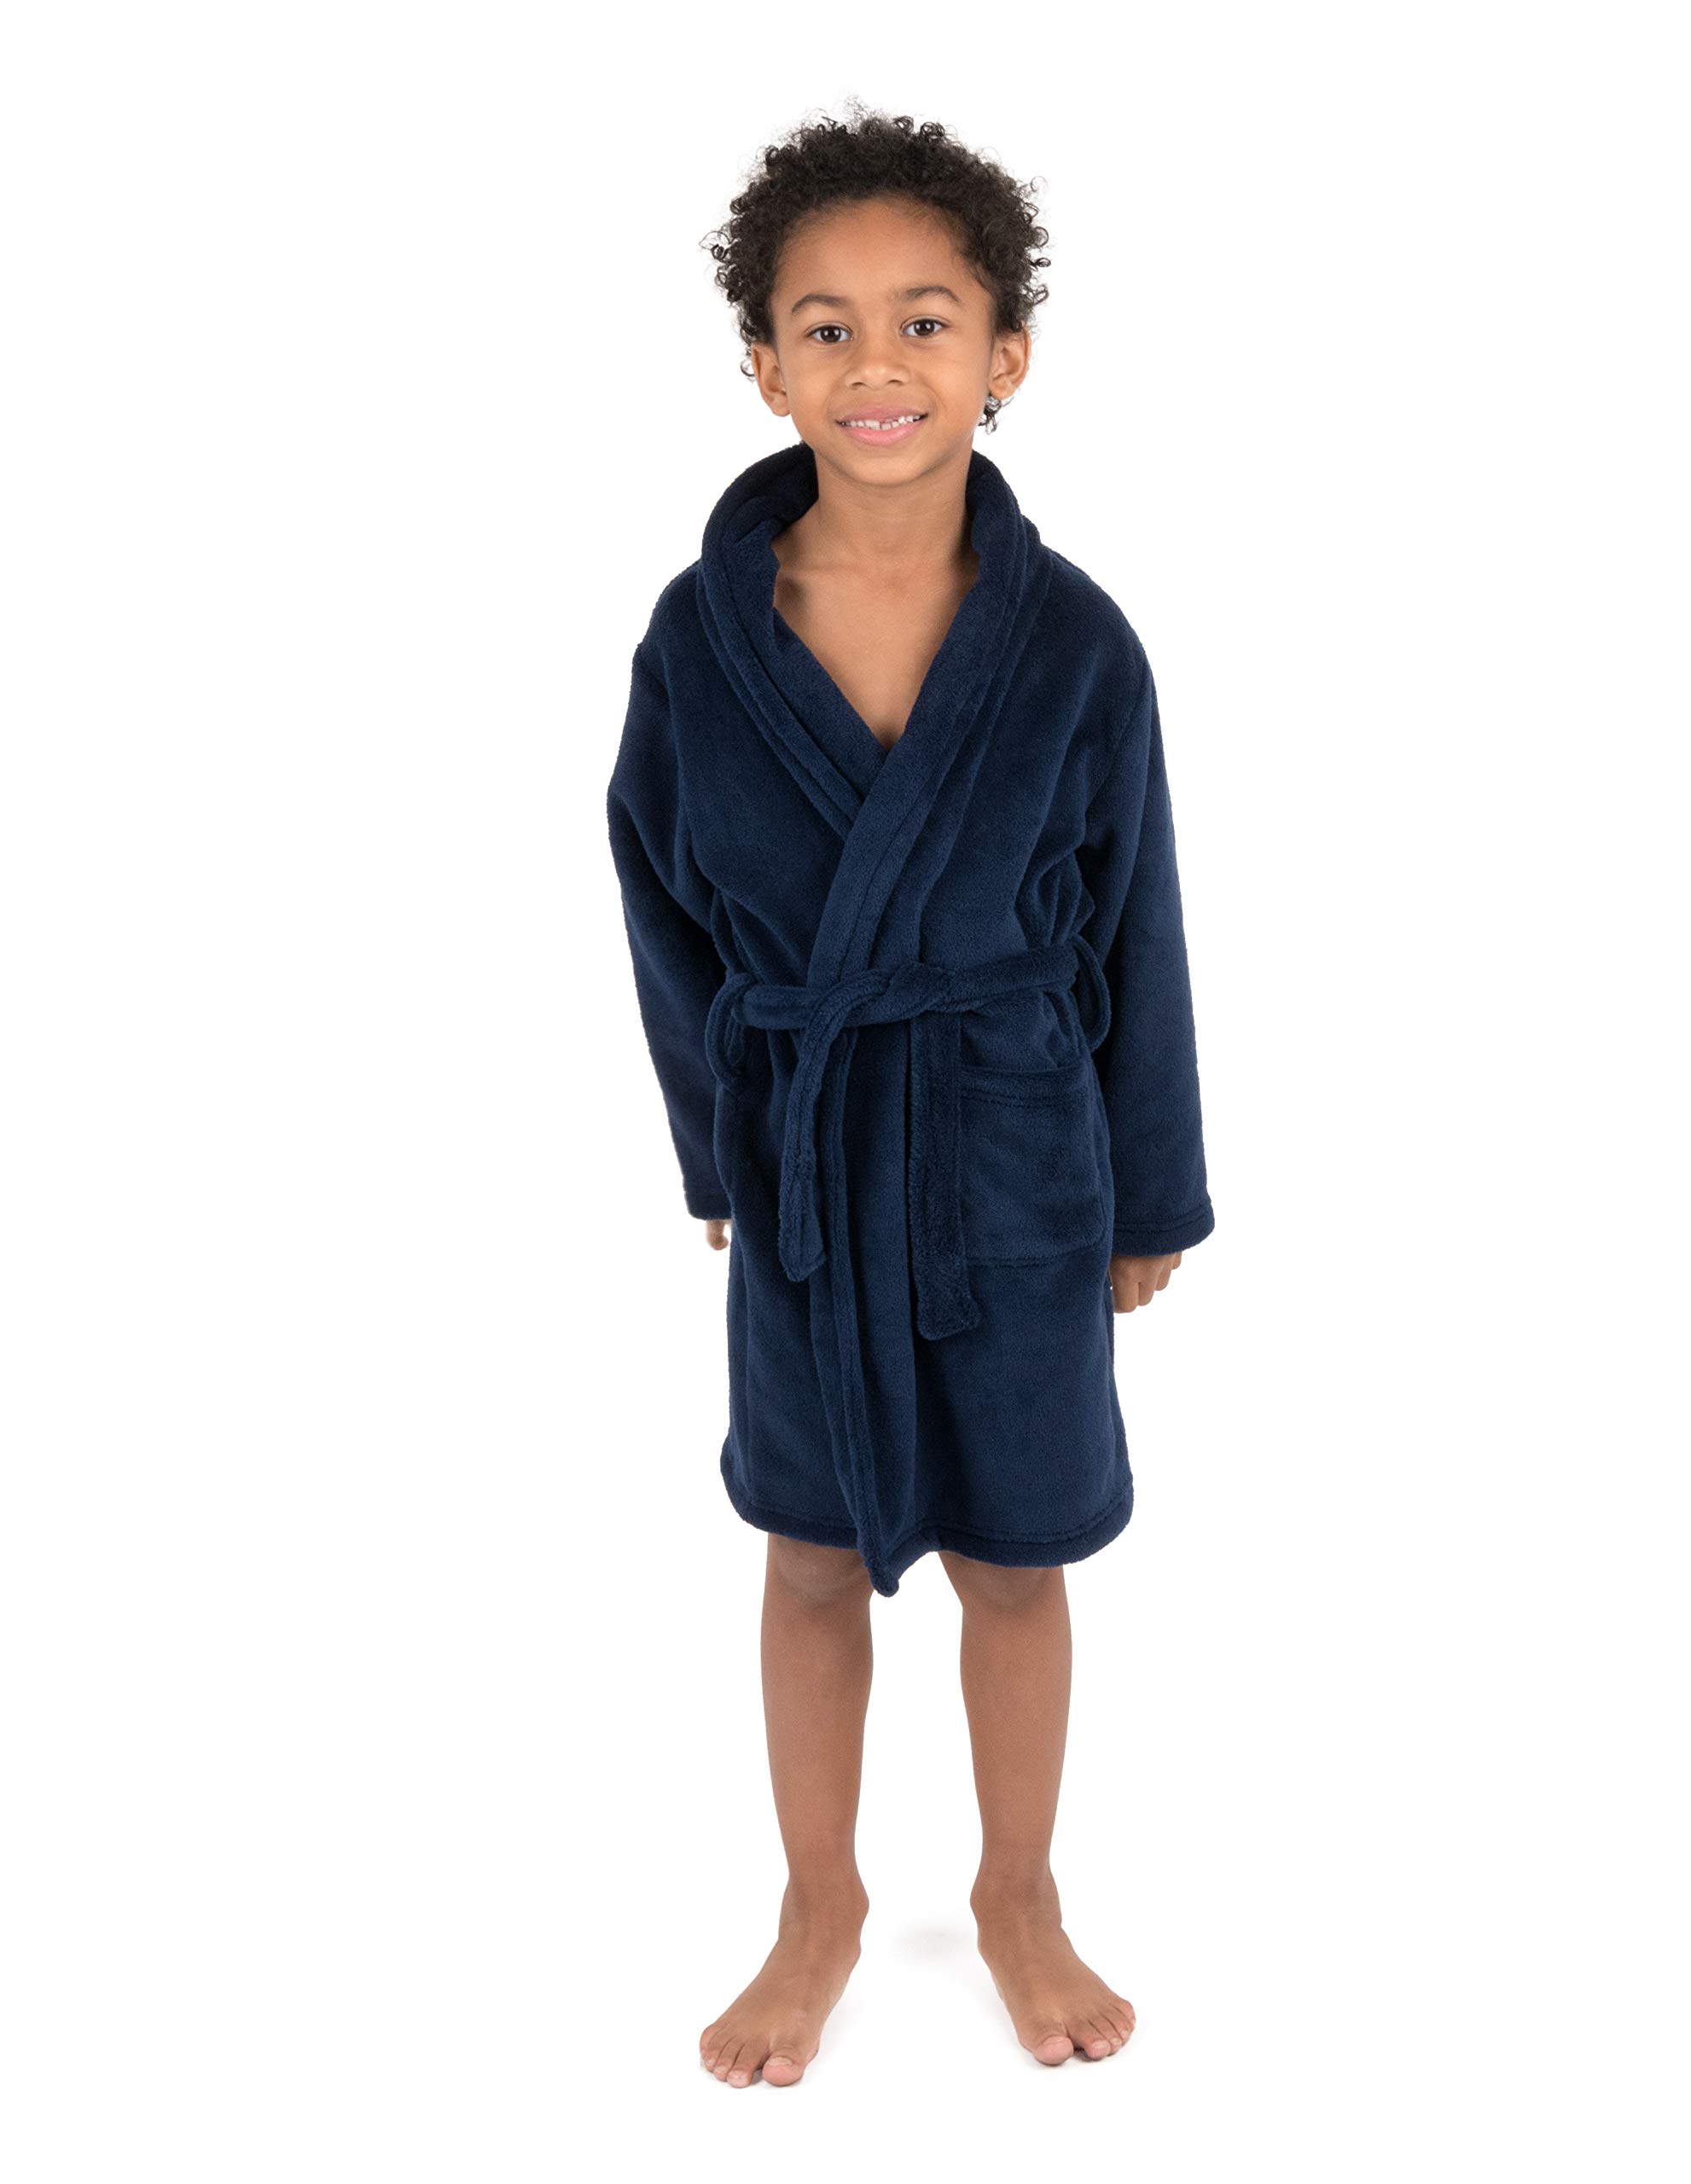 Leveret Kids Robe Boys Girls Solid Hooded Fleece Sleep Robe Bathrobe (2 Toddler-16 Years) Variety of Colors